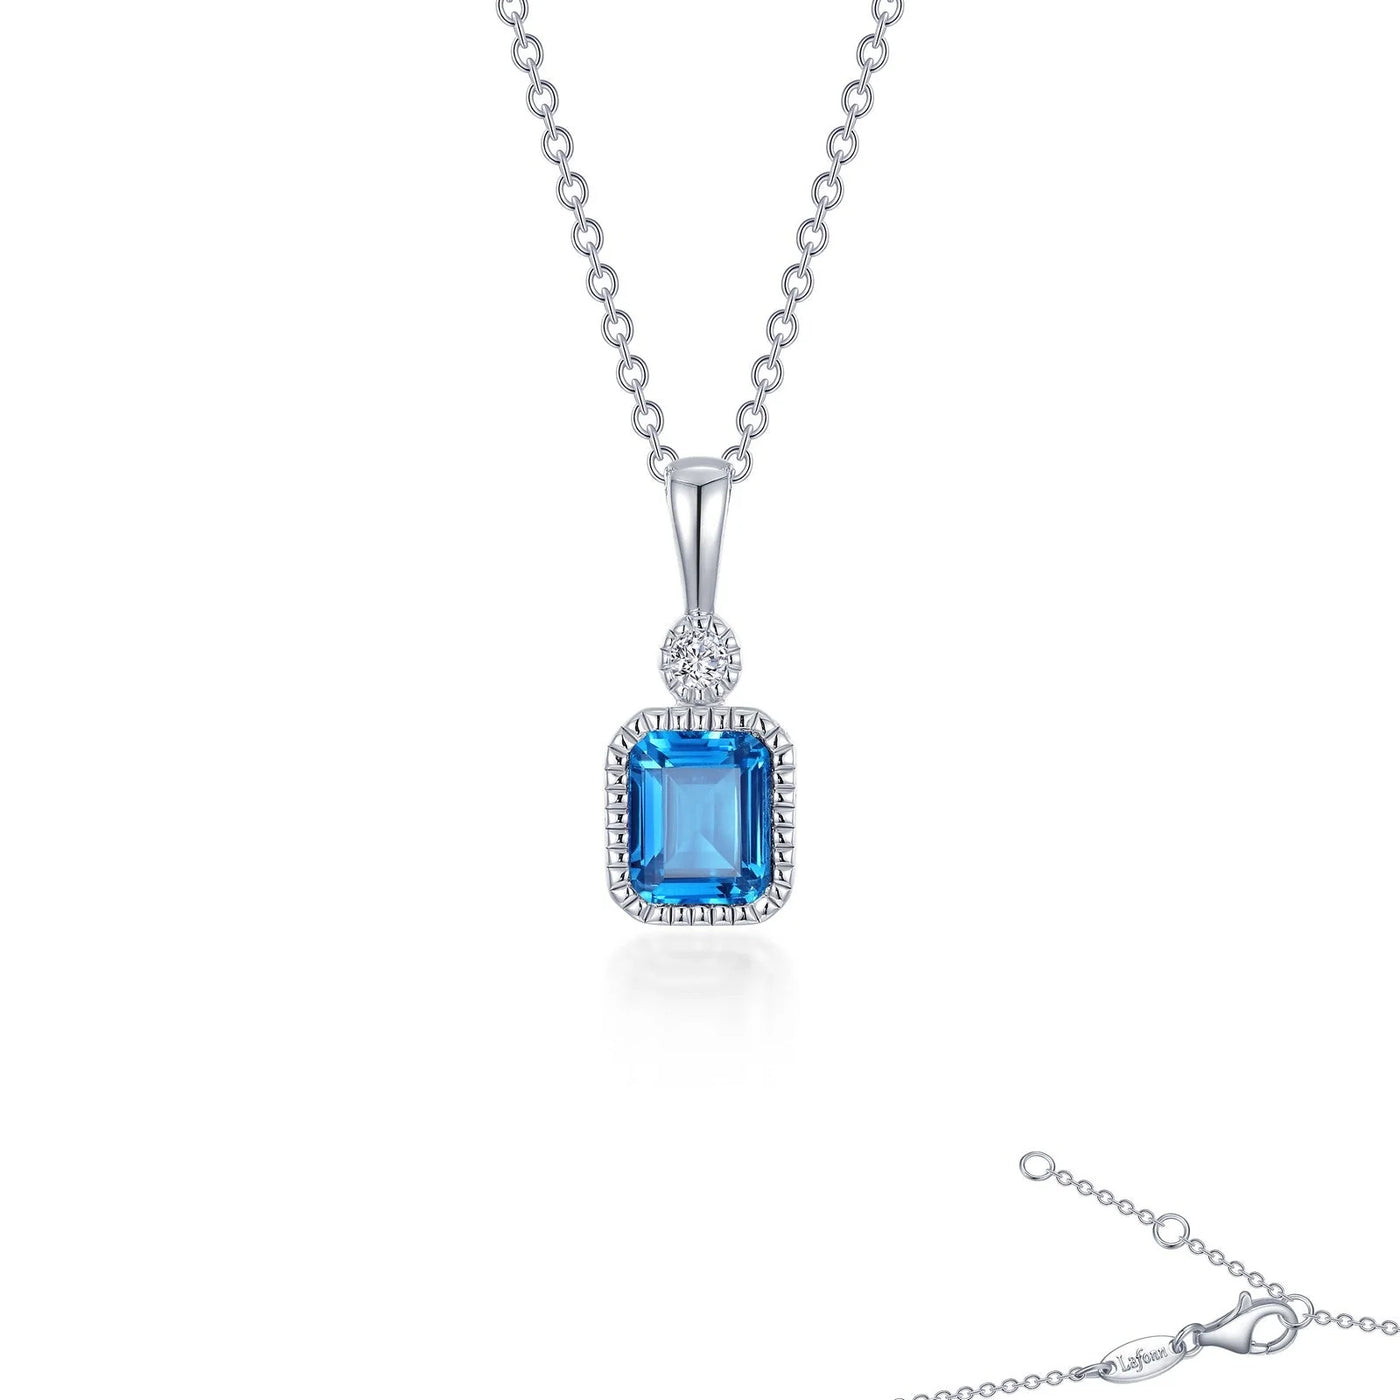 Simulated Emerald-Cut Blue Topaz & Diamond December Birthstone Necklace